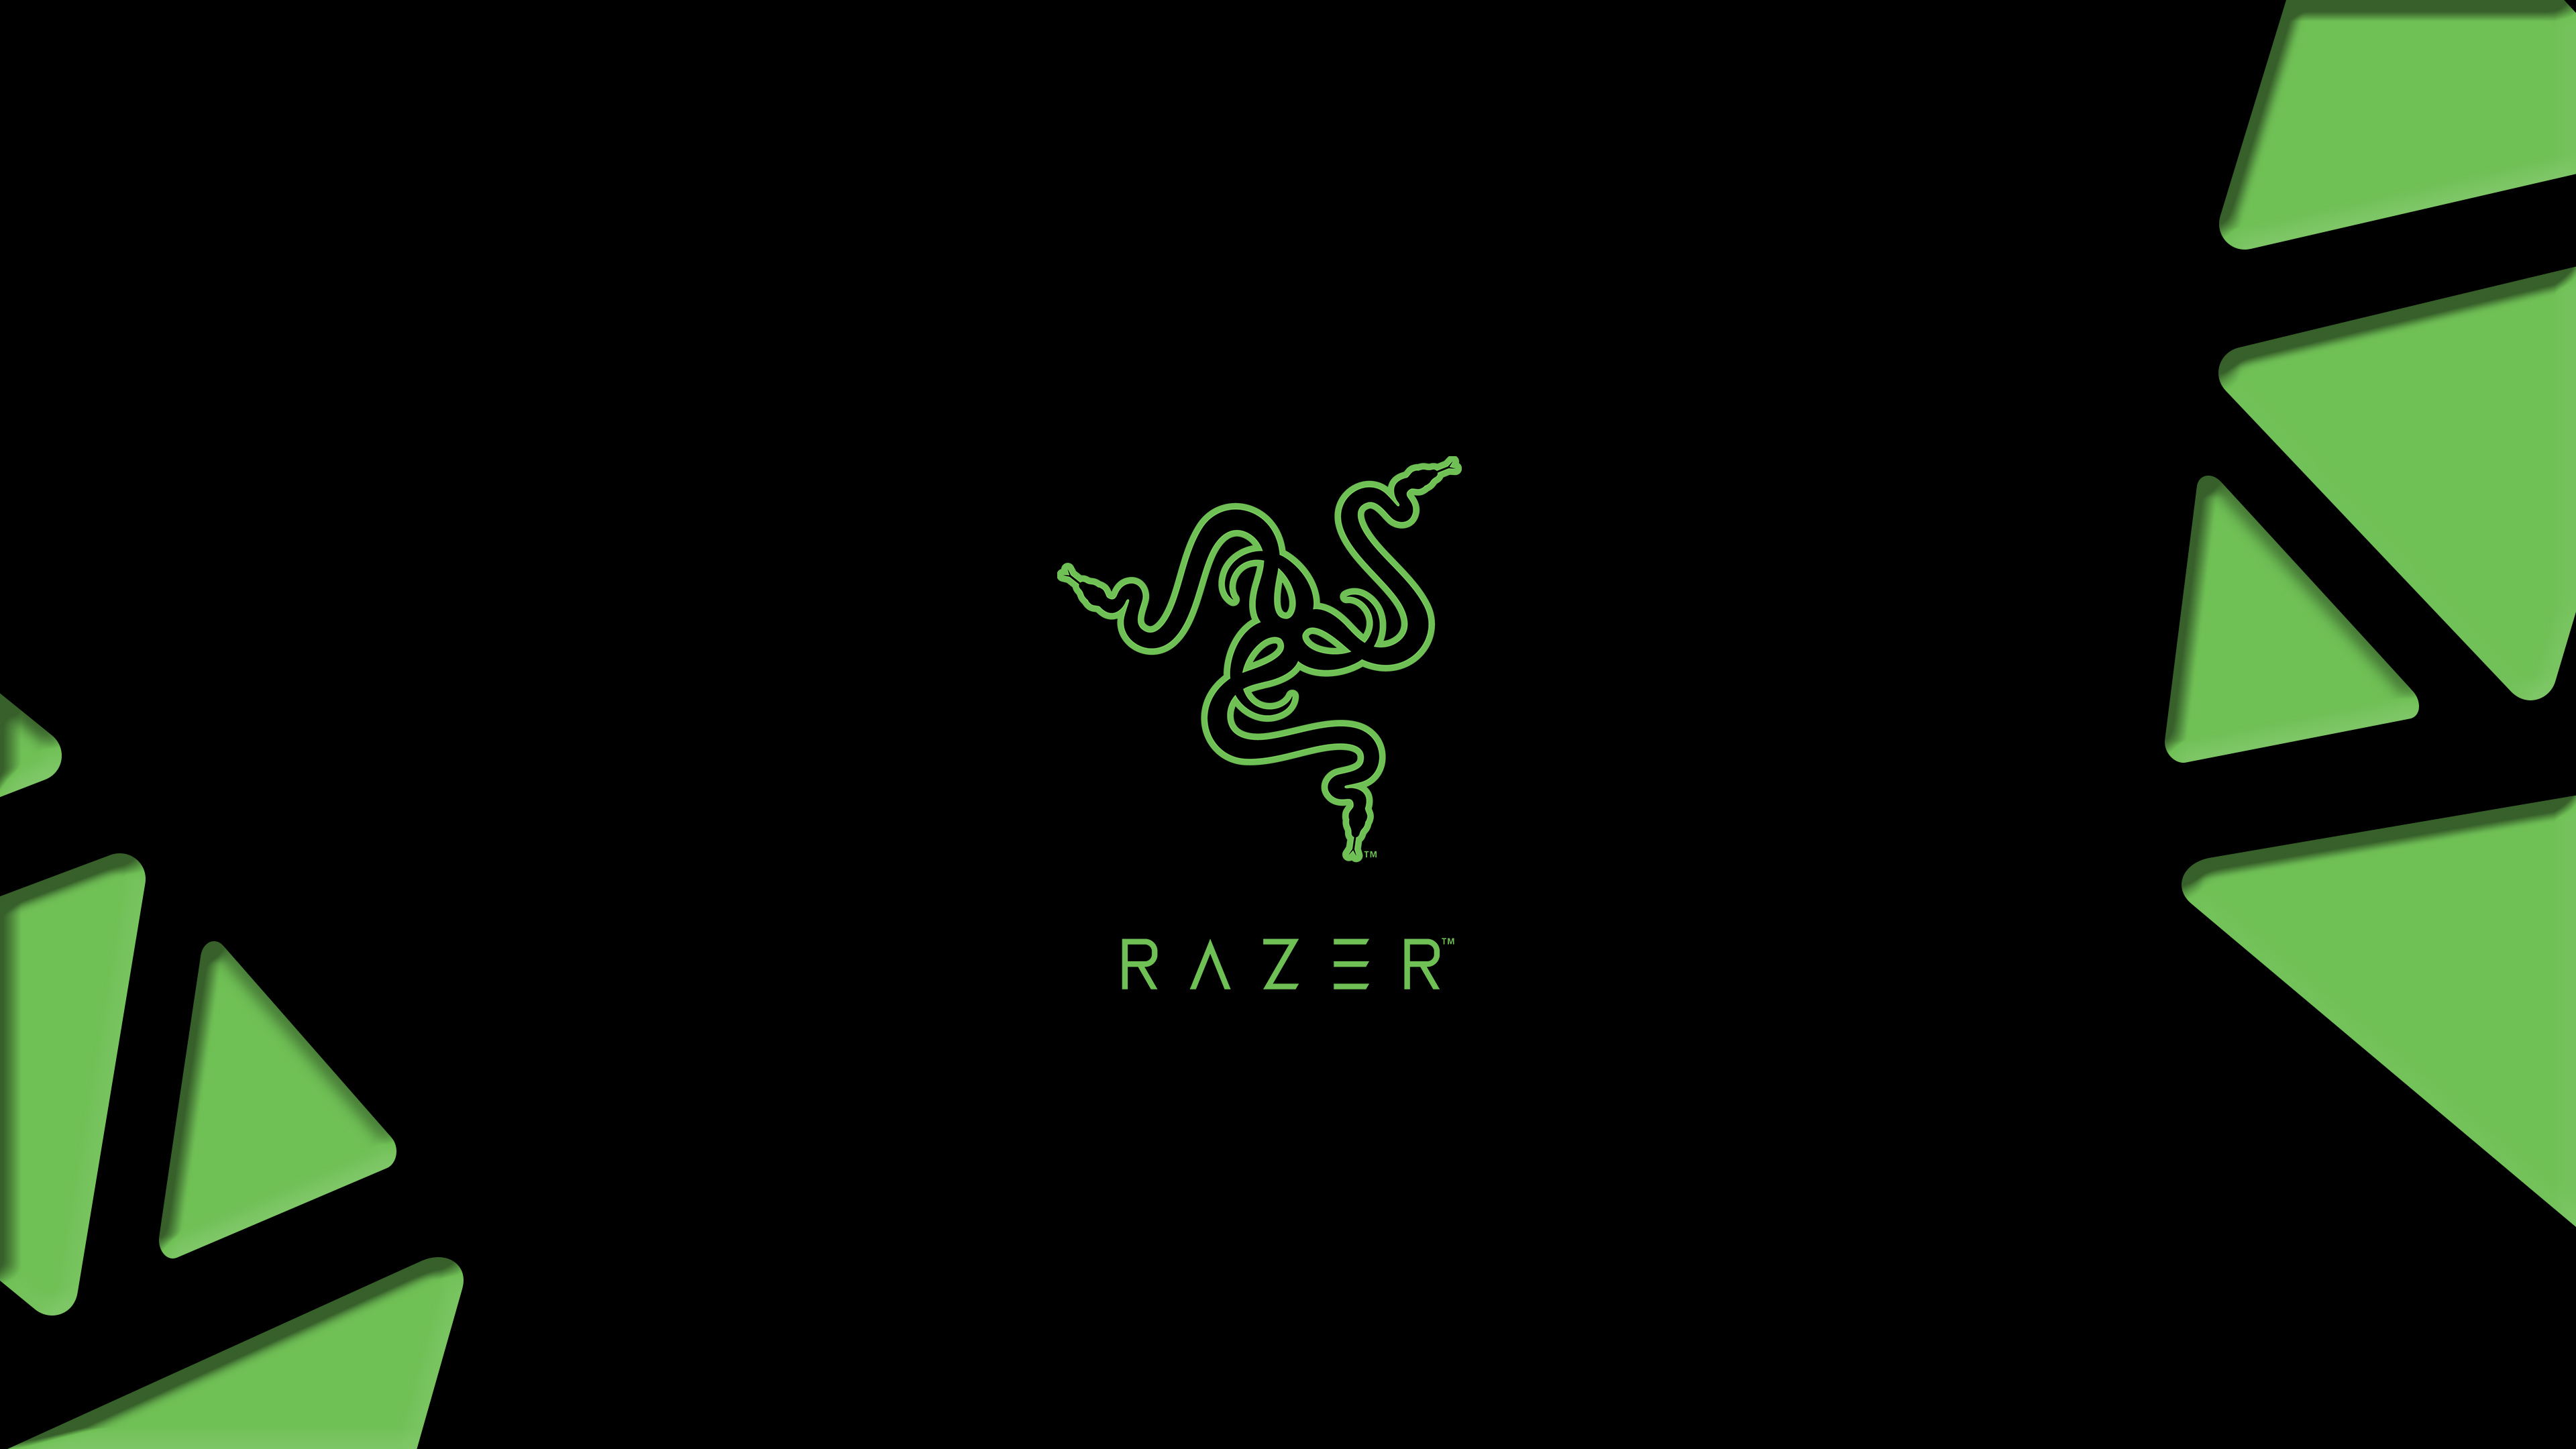 Razer Gamer Logo Wallpaper Hd Hi Tech 4k Wallpapers Images Photos And Background